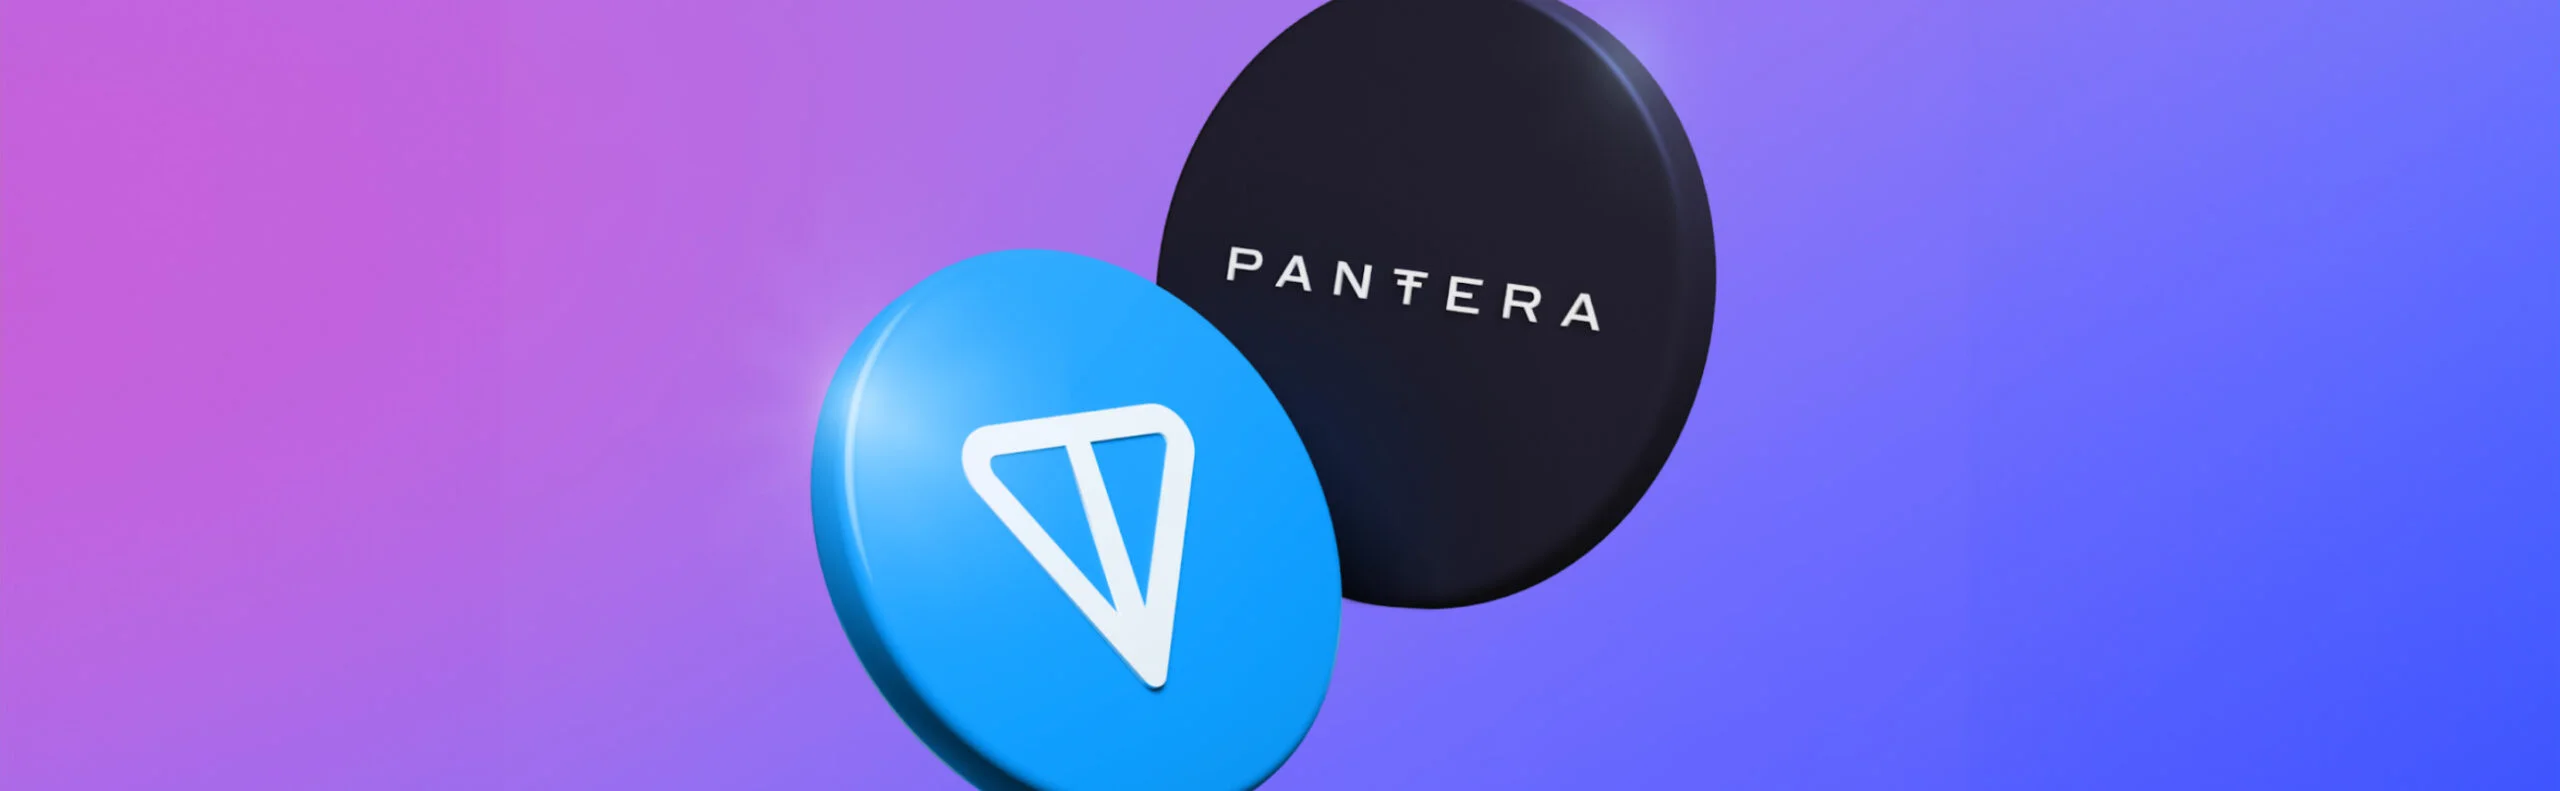 Pantera Capital Invests in Telegram’s TON for Web3 Adoption